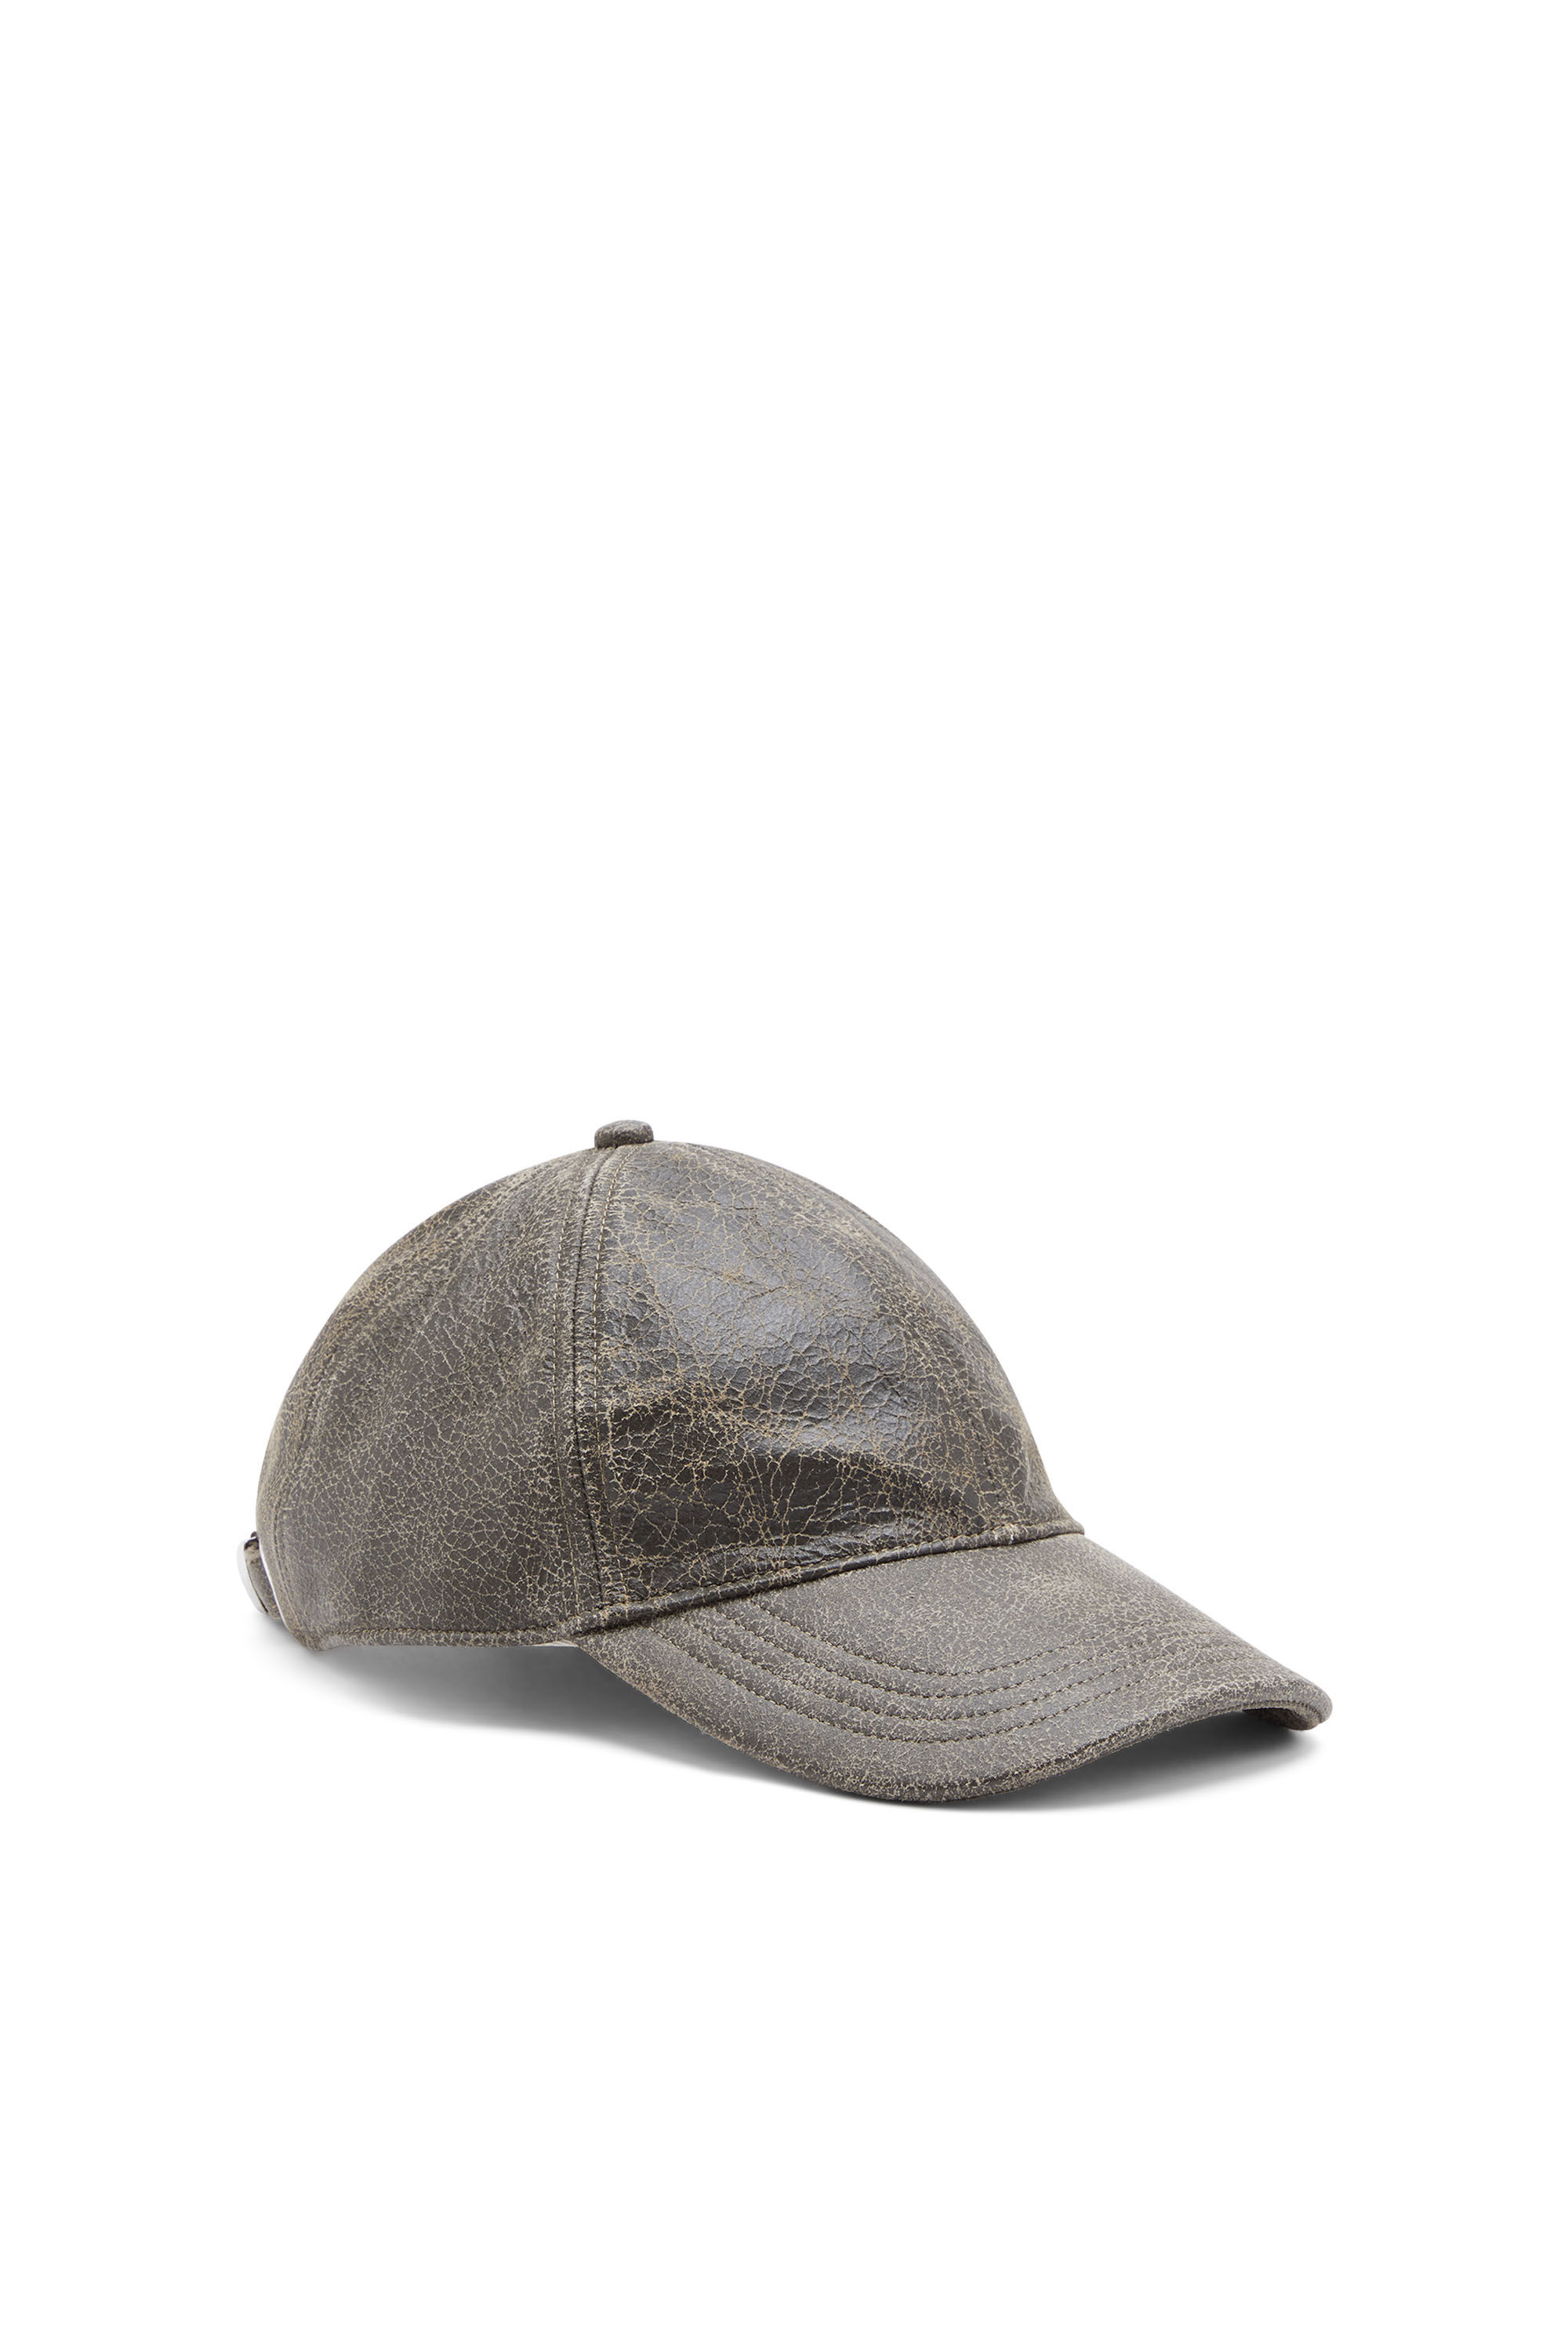 C-BARINS Man: Baseball cap in cracked leather | Diesel